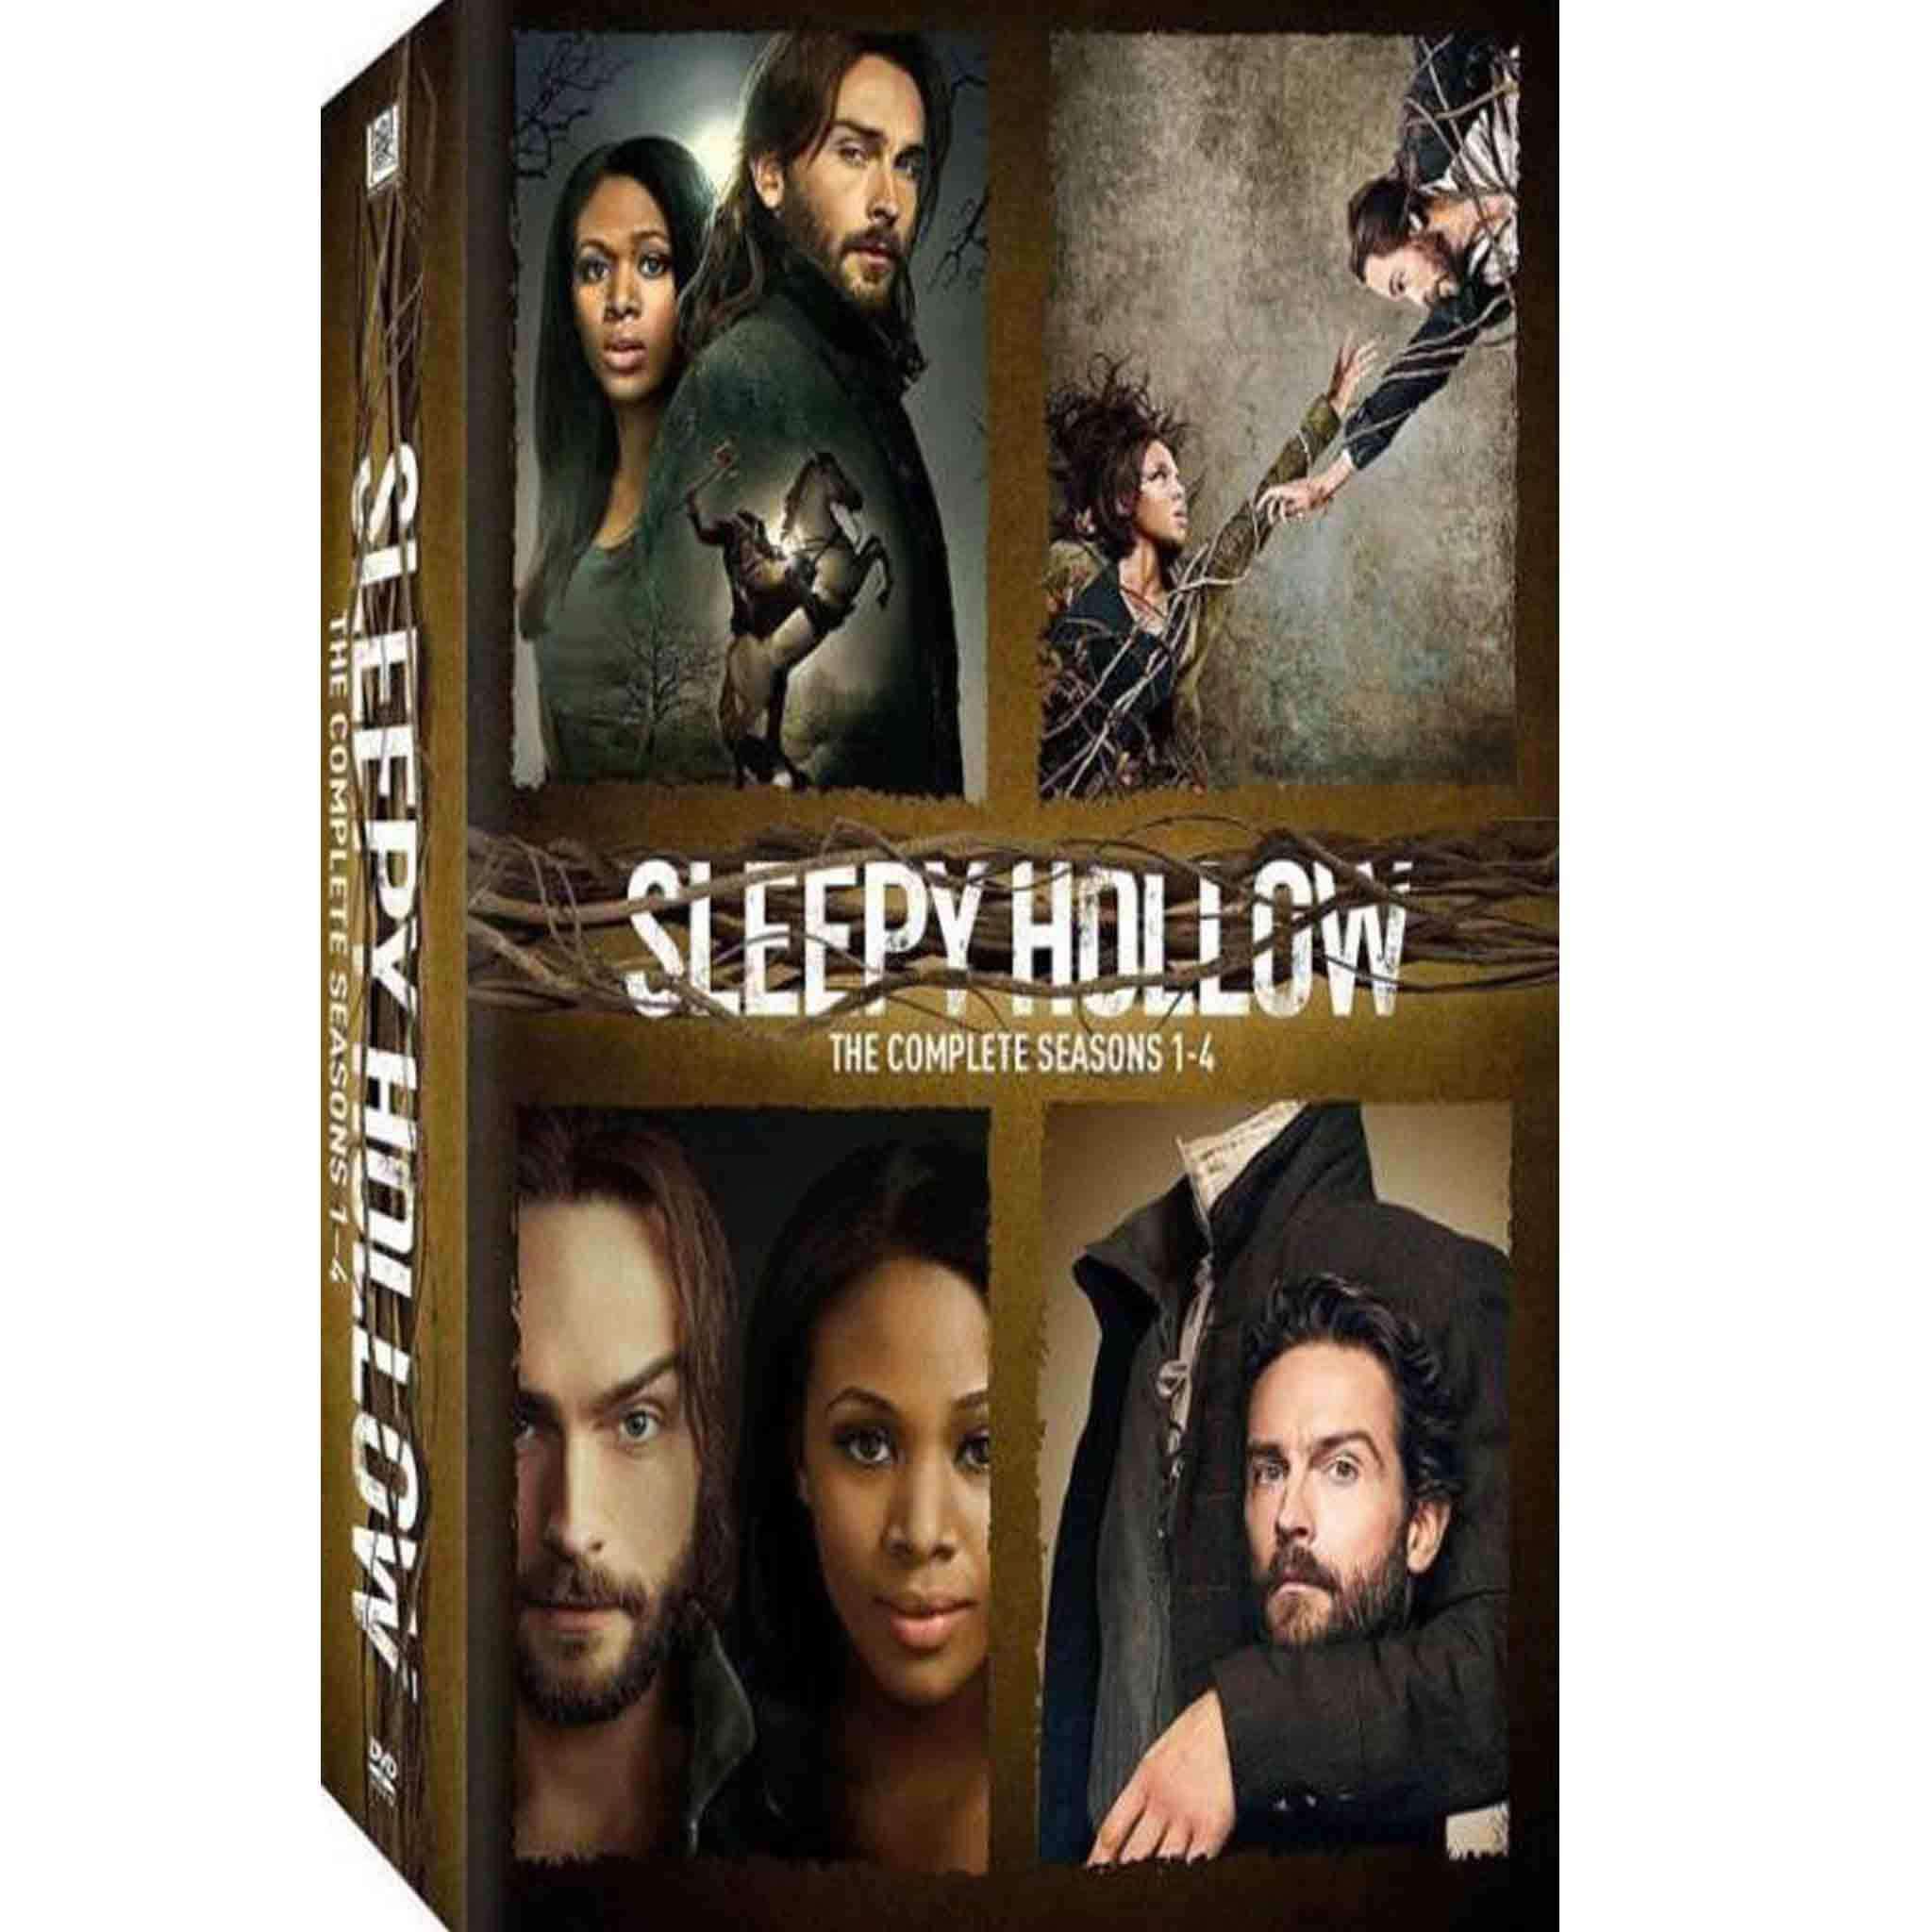 Sleepy Hollow DVD Complete Series Box Set 20th Century Fox DVDs & Blu-ray Discs > DVDs > Box Sets